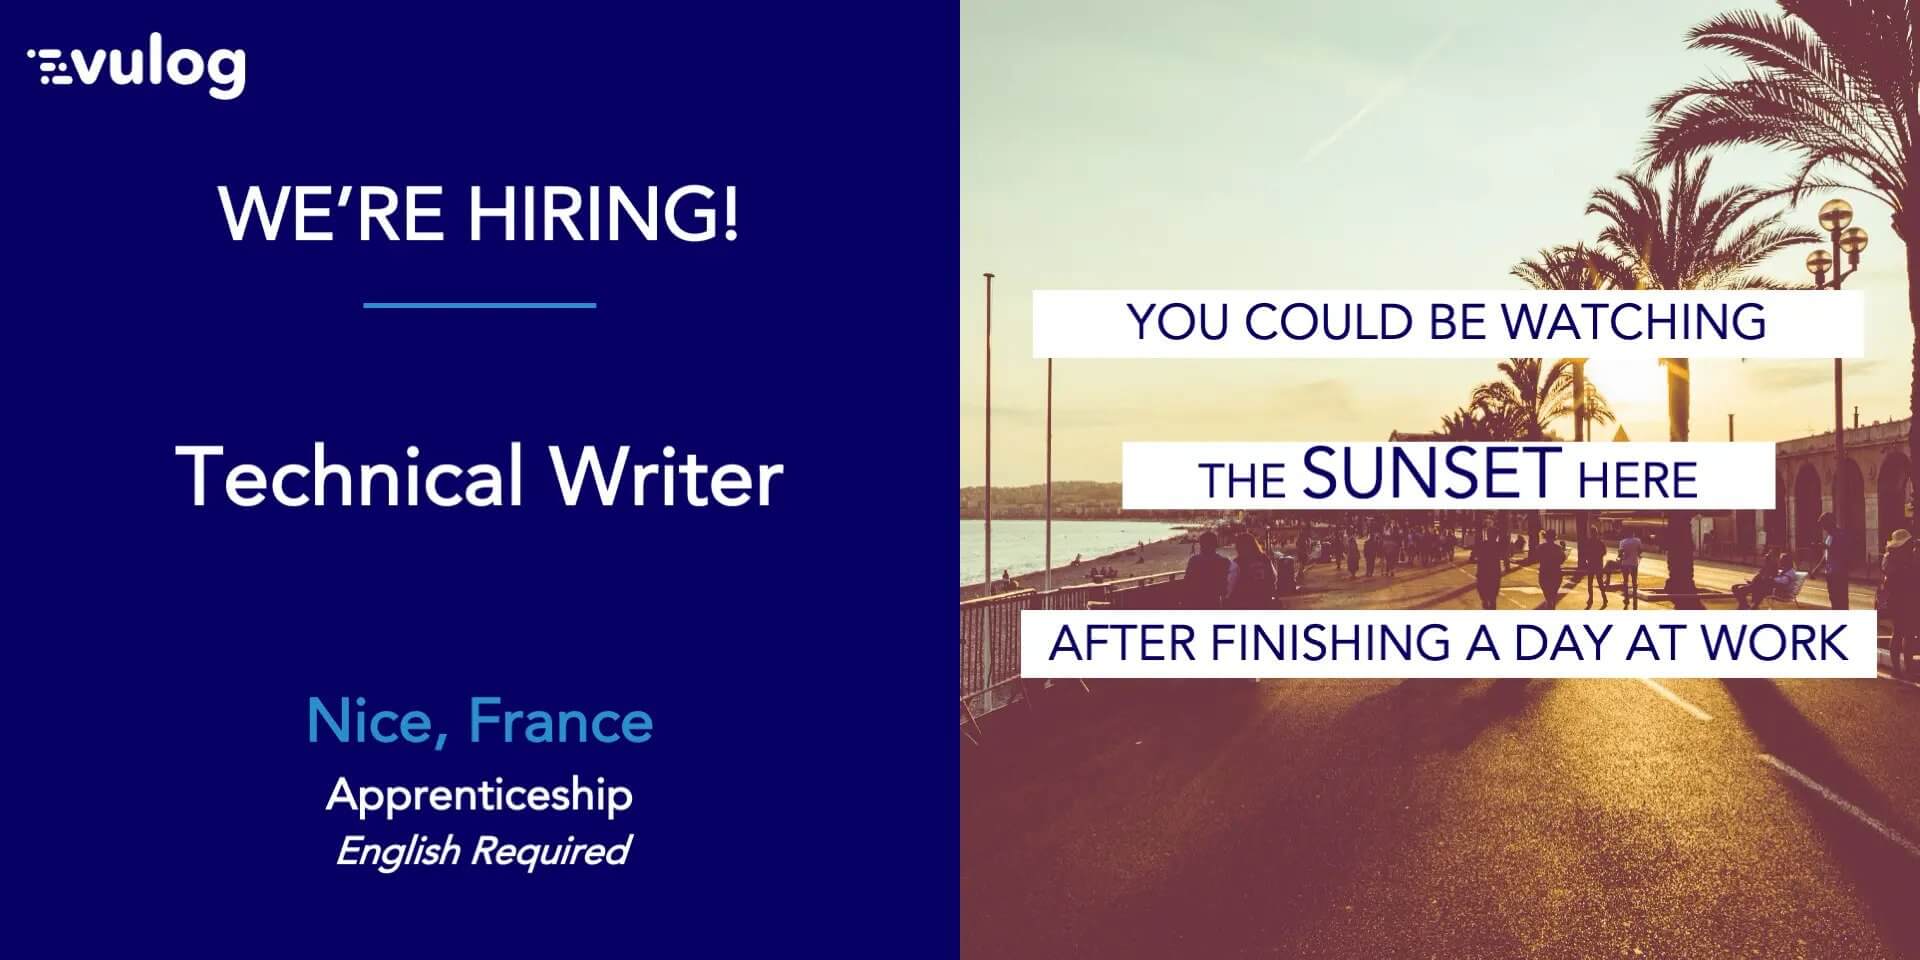 Vulog hiring Technical Writer in Nice